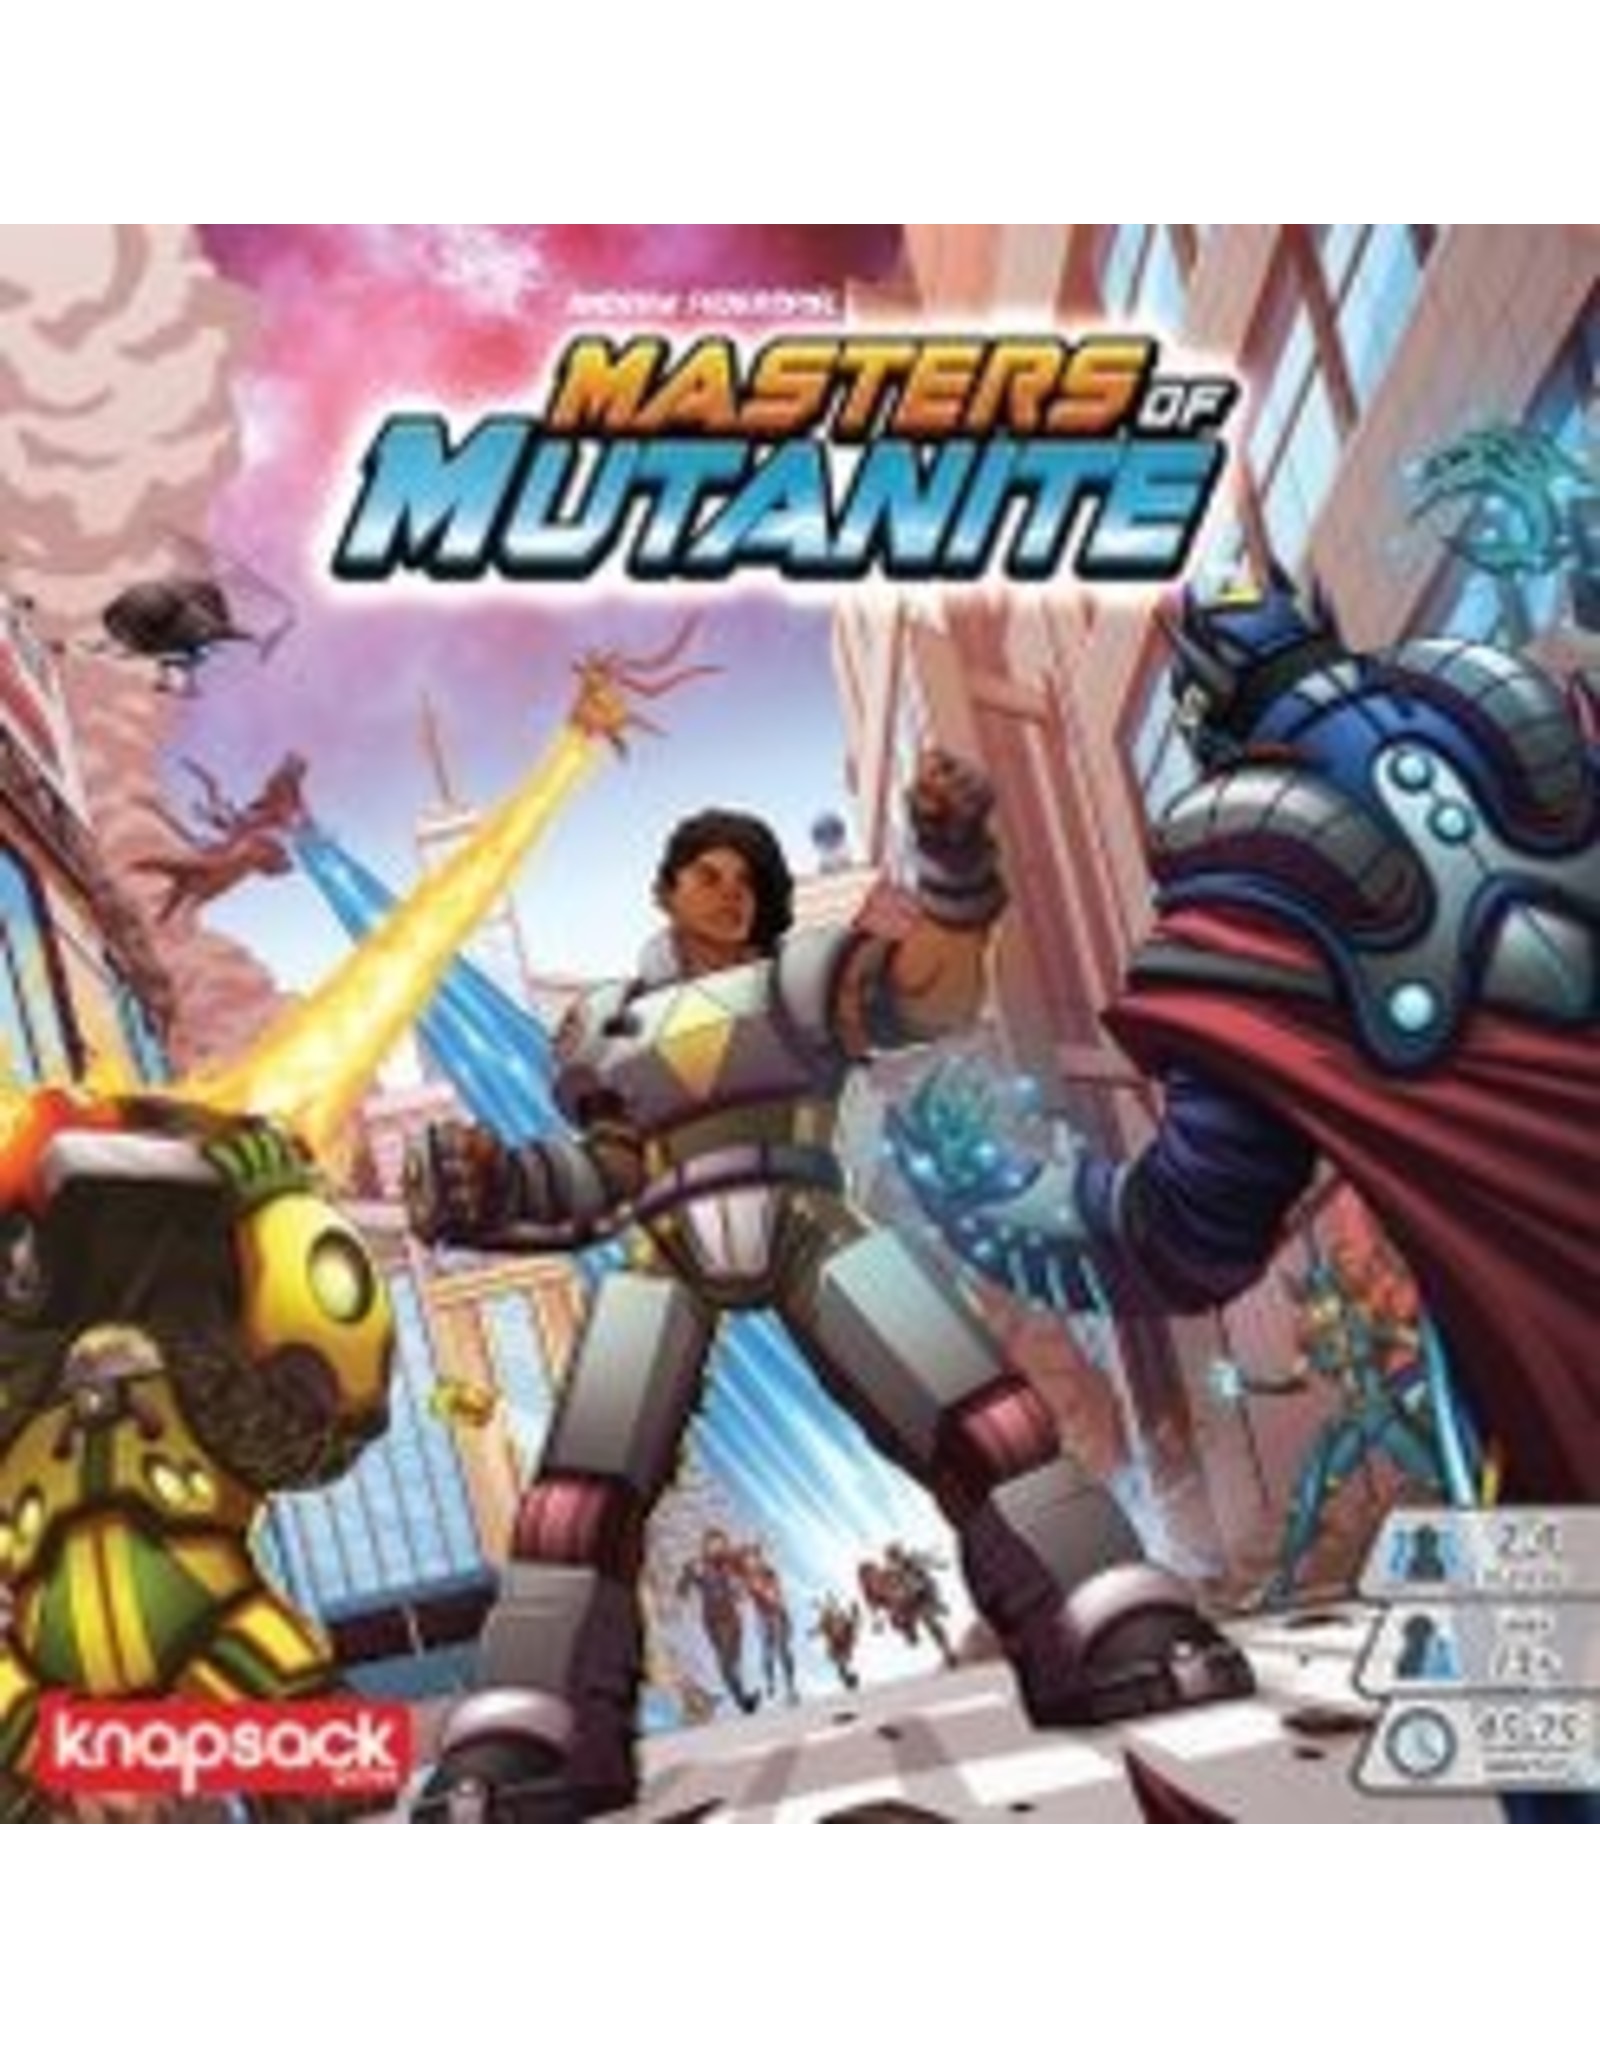 Knapsack Games Masters of Mutanite (Kickstarter)